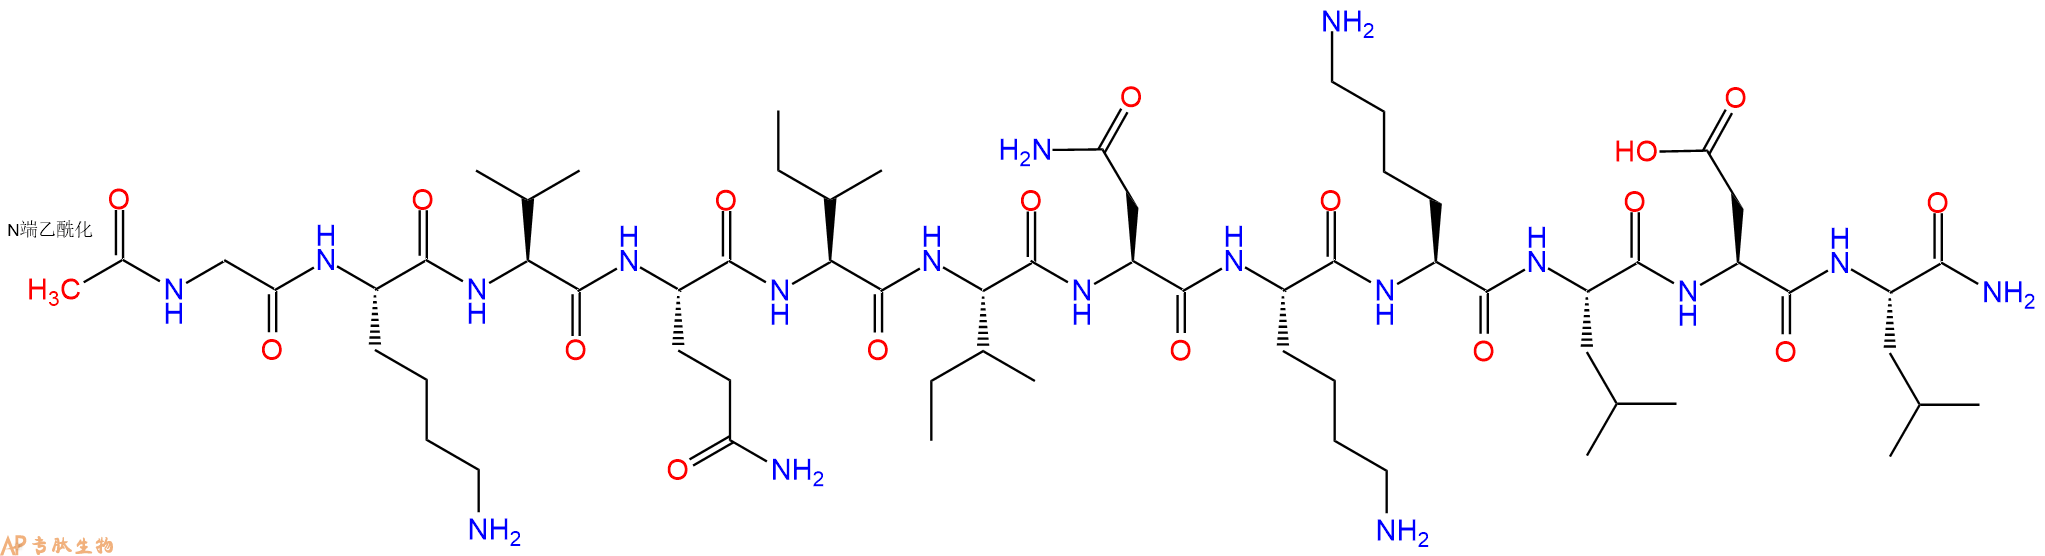 专肽生物产品Tau肽 Acetyl-Tau Peptide (273-284) amide1684399-52-7